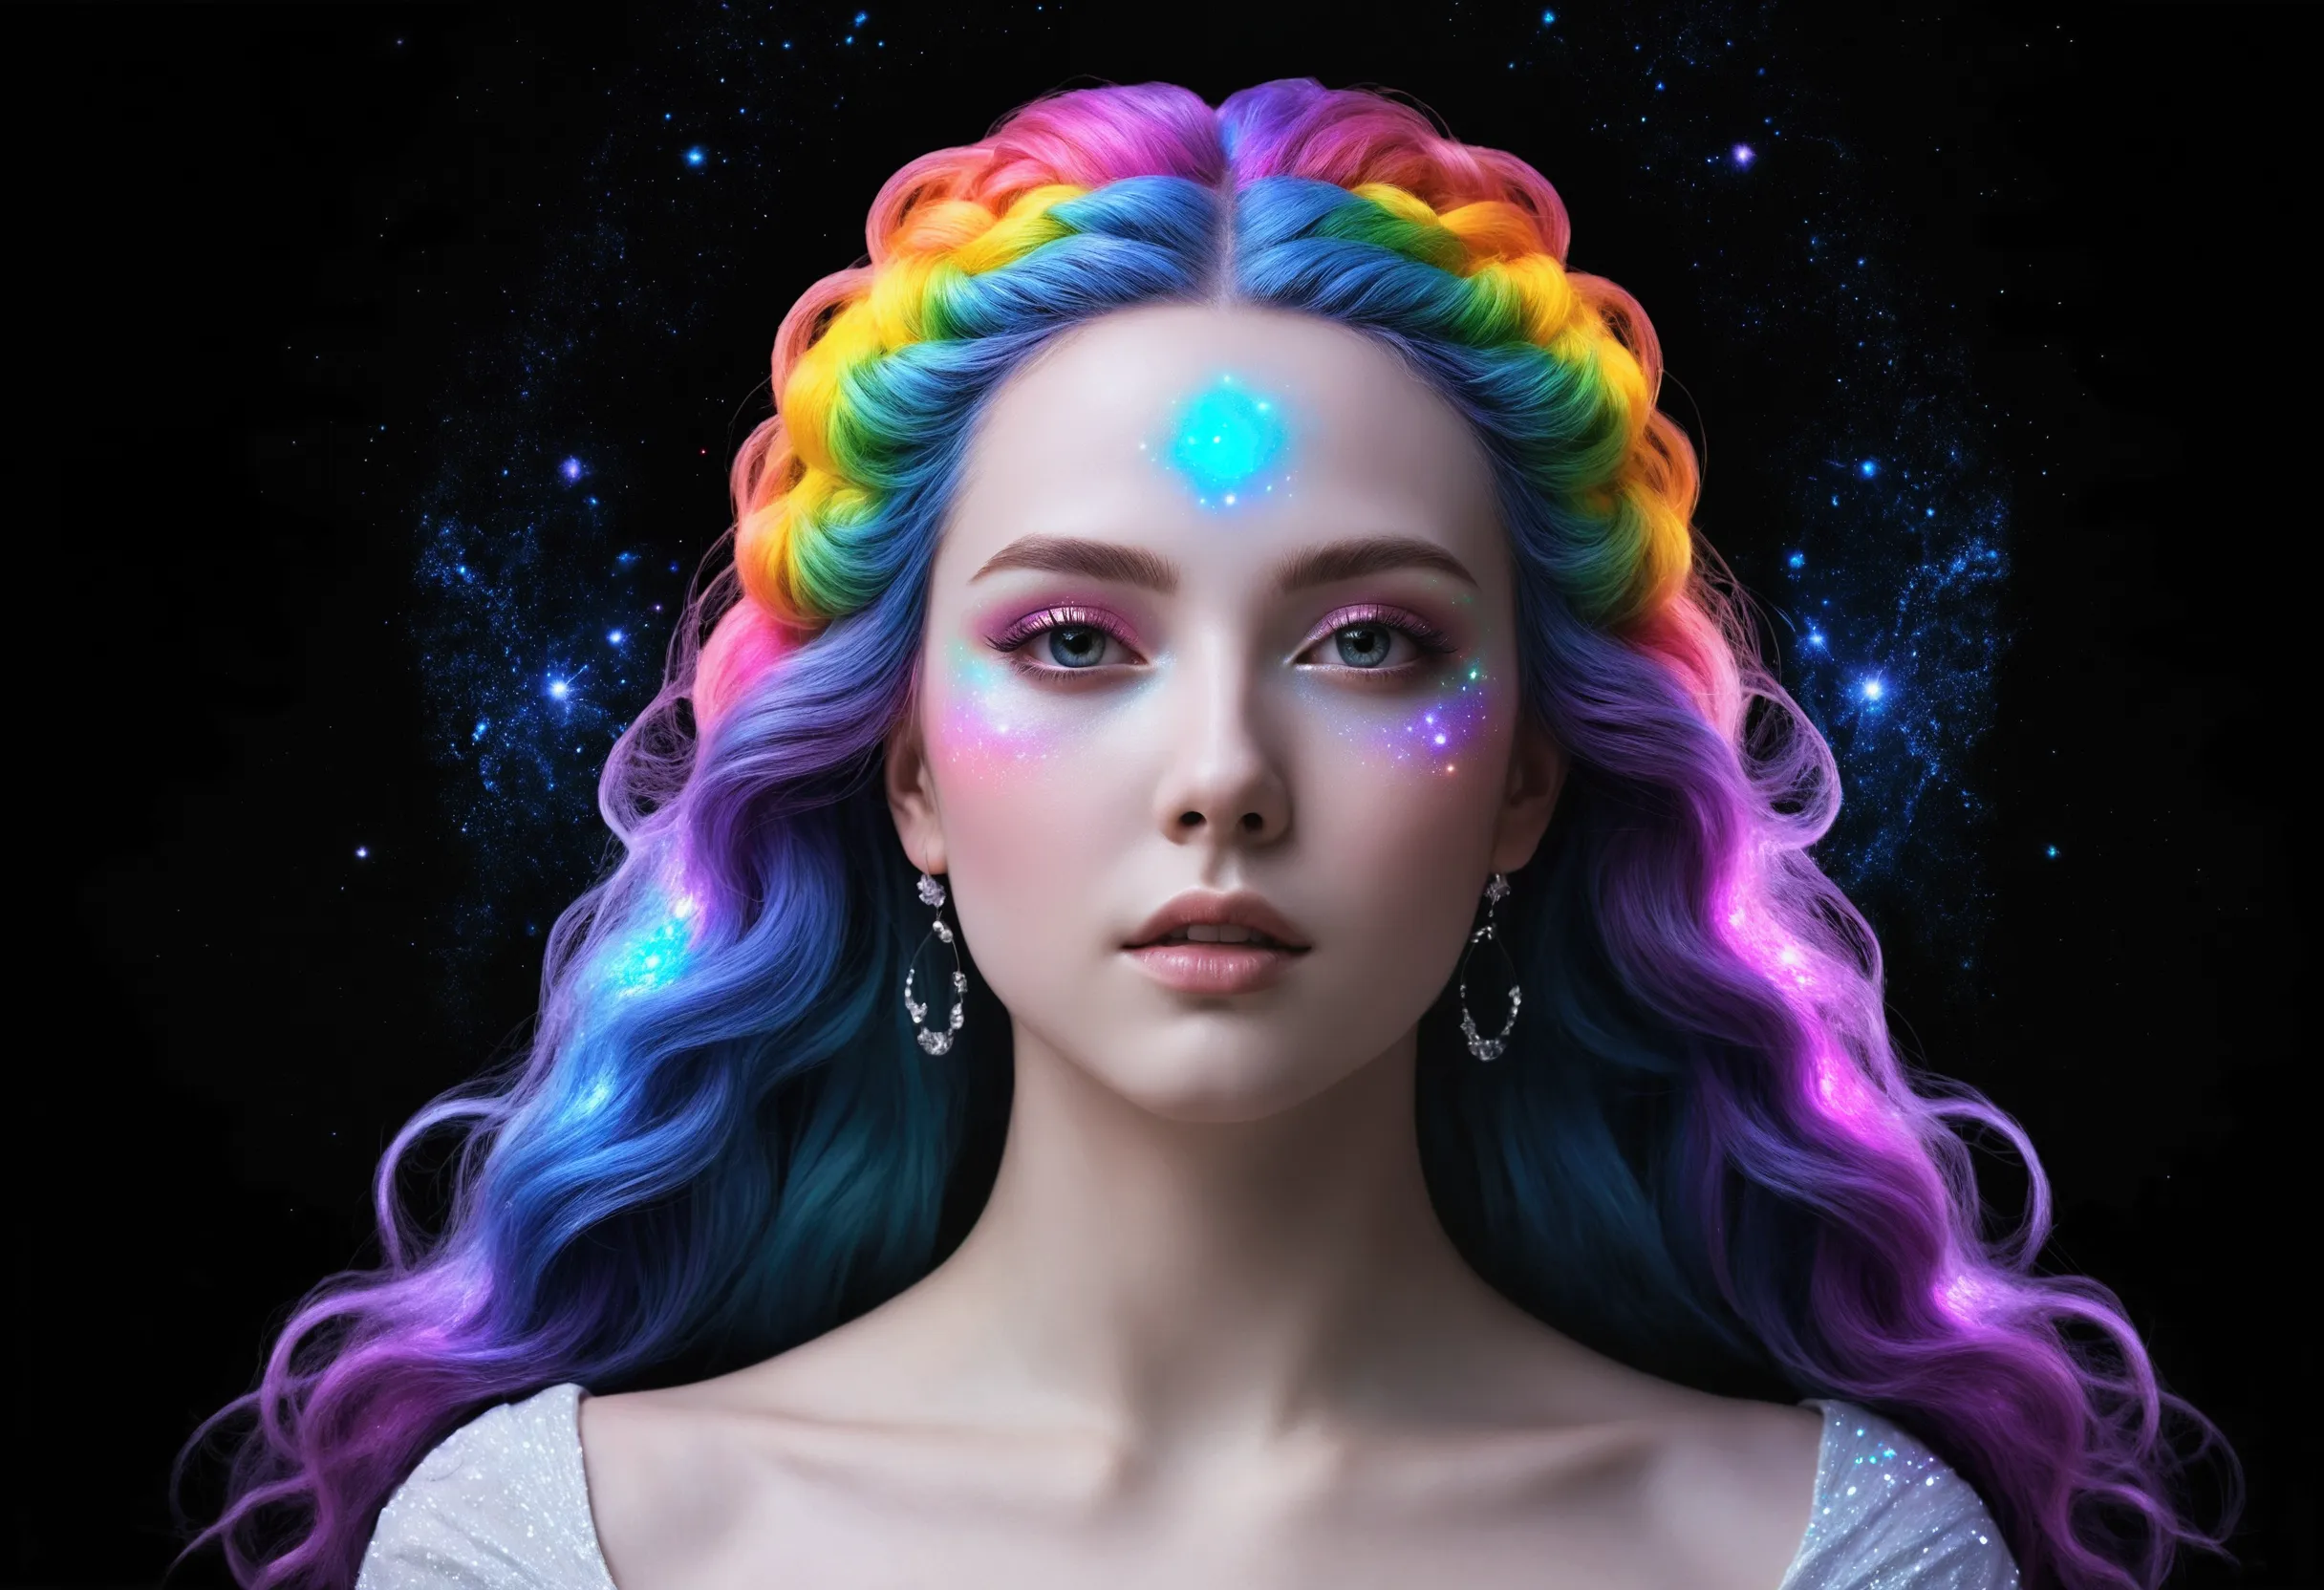 rainbow goddess, white skin, galaxy aesthetic, black background, overwhelmingly bright